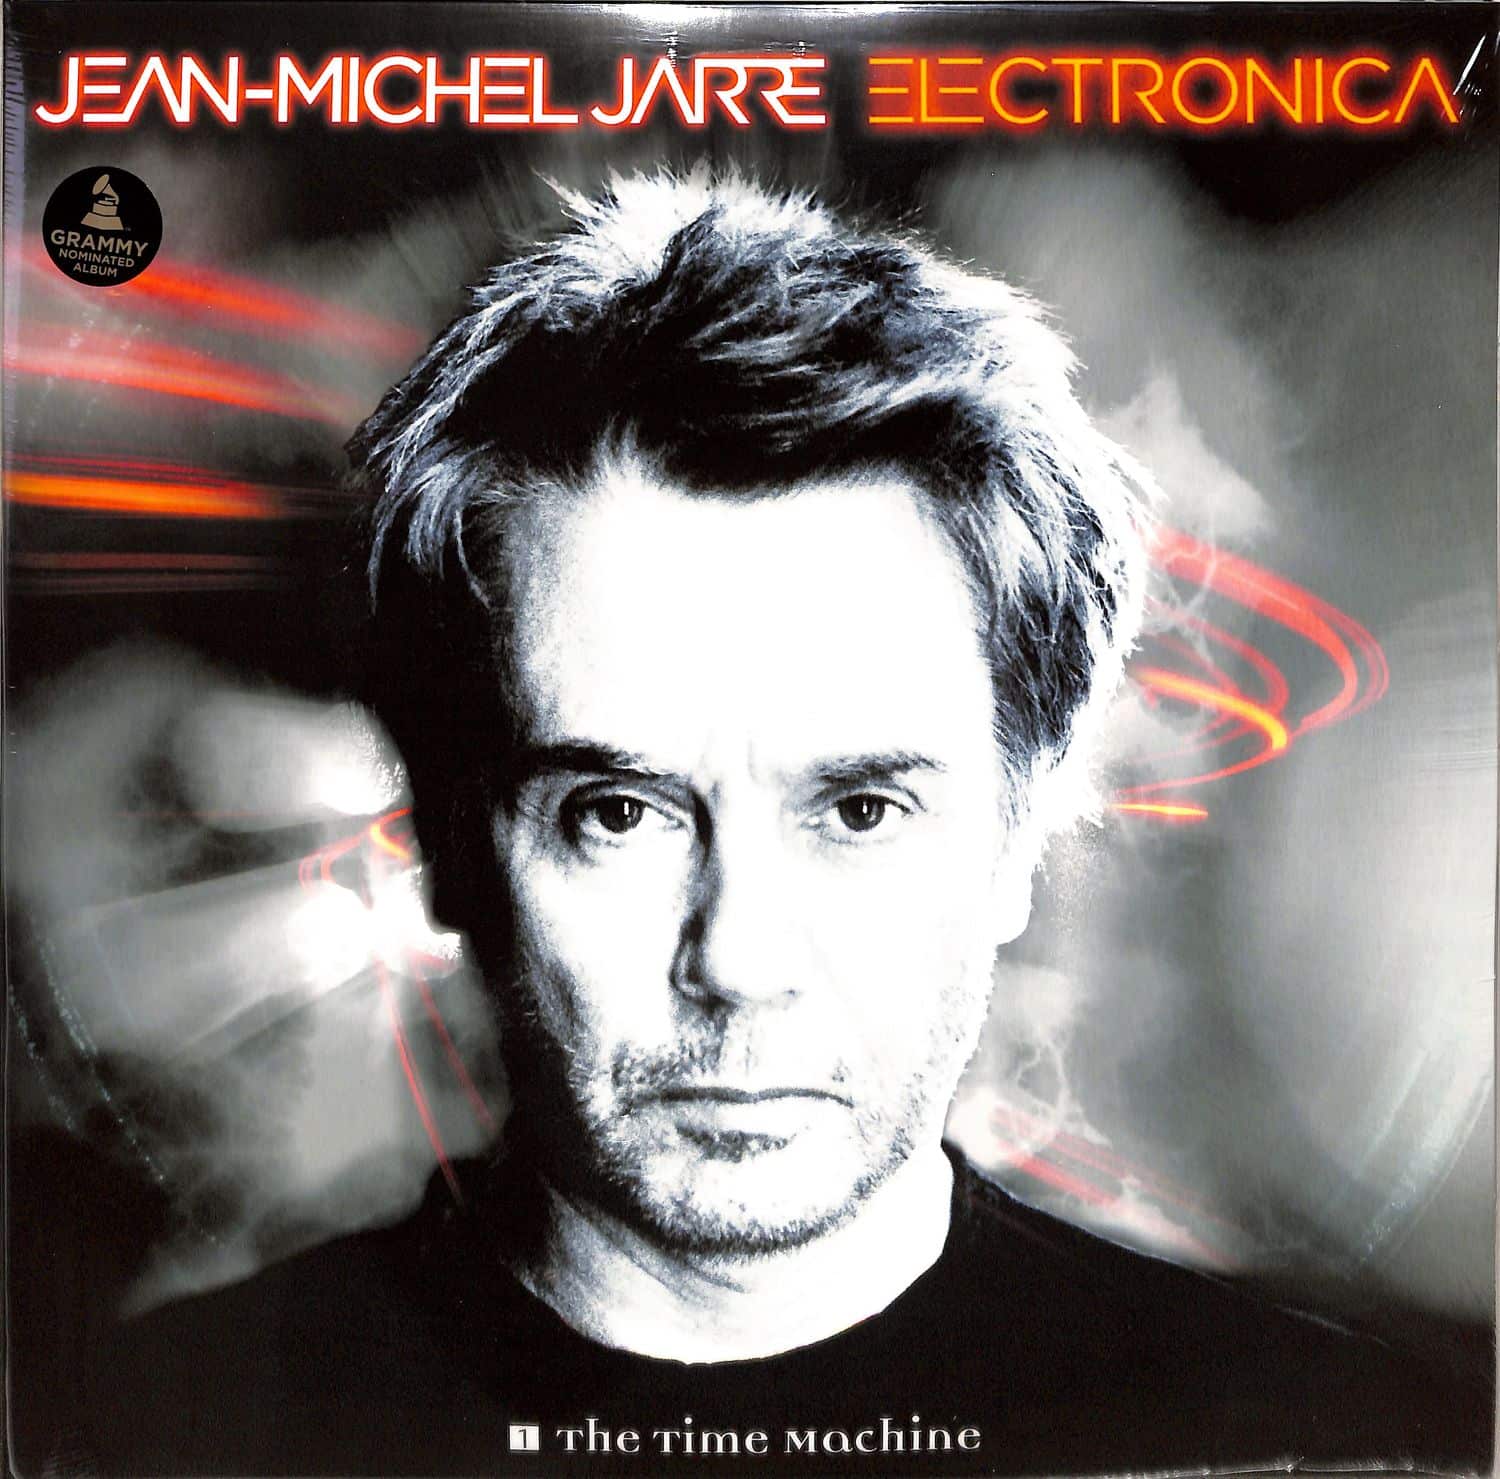 Jean-Michel Jarre - ELECTRONICA 1: THE TIME MACHINE 